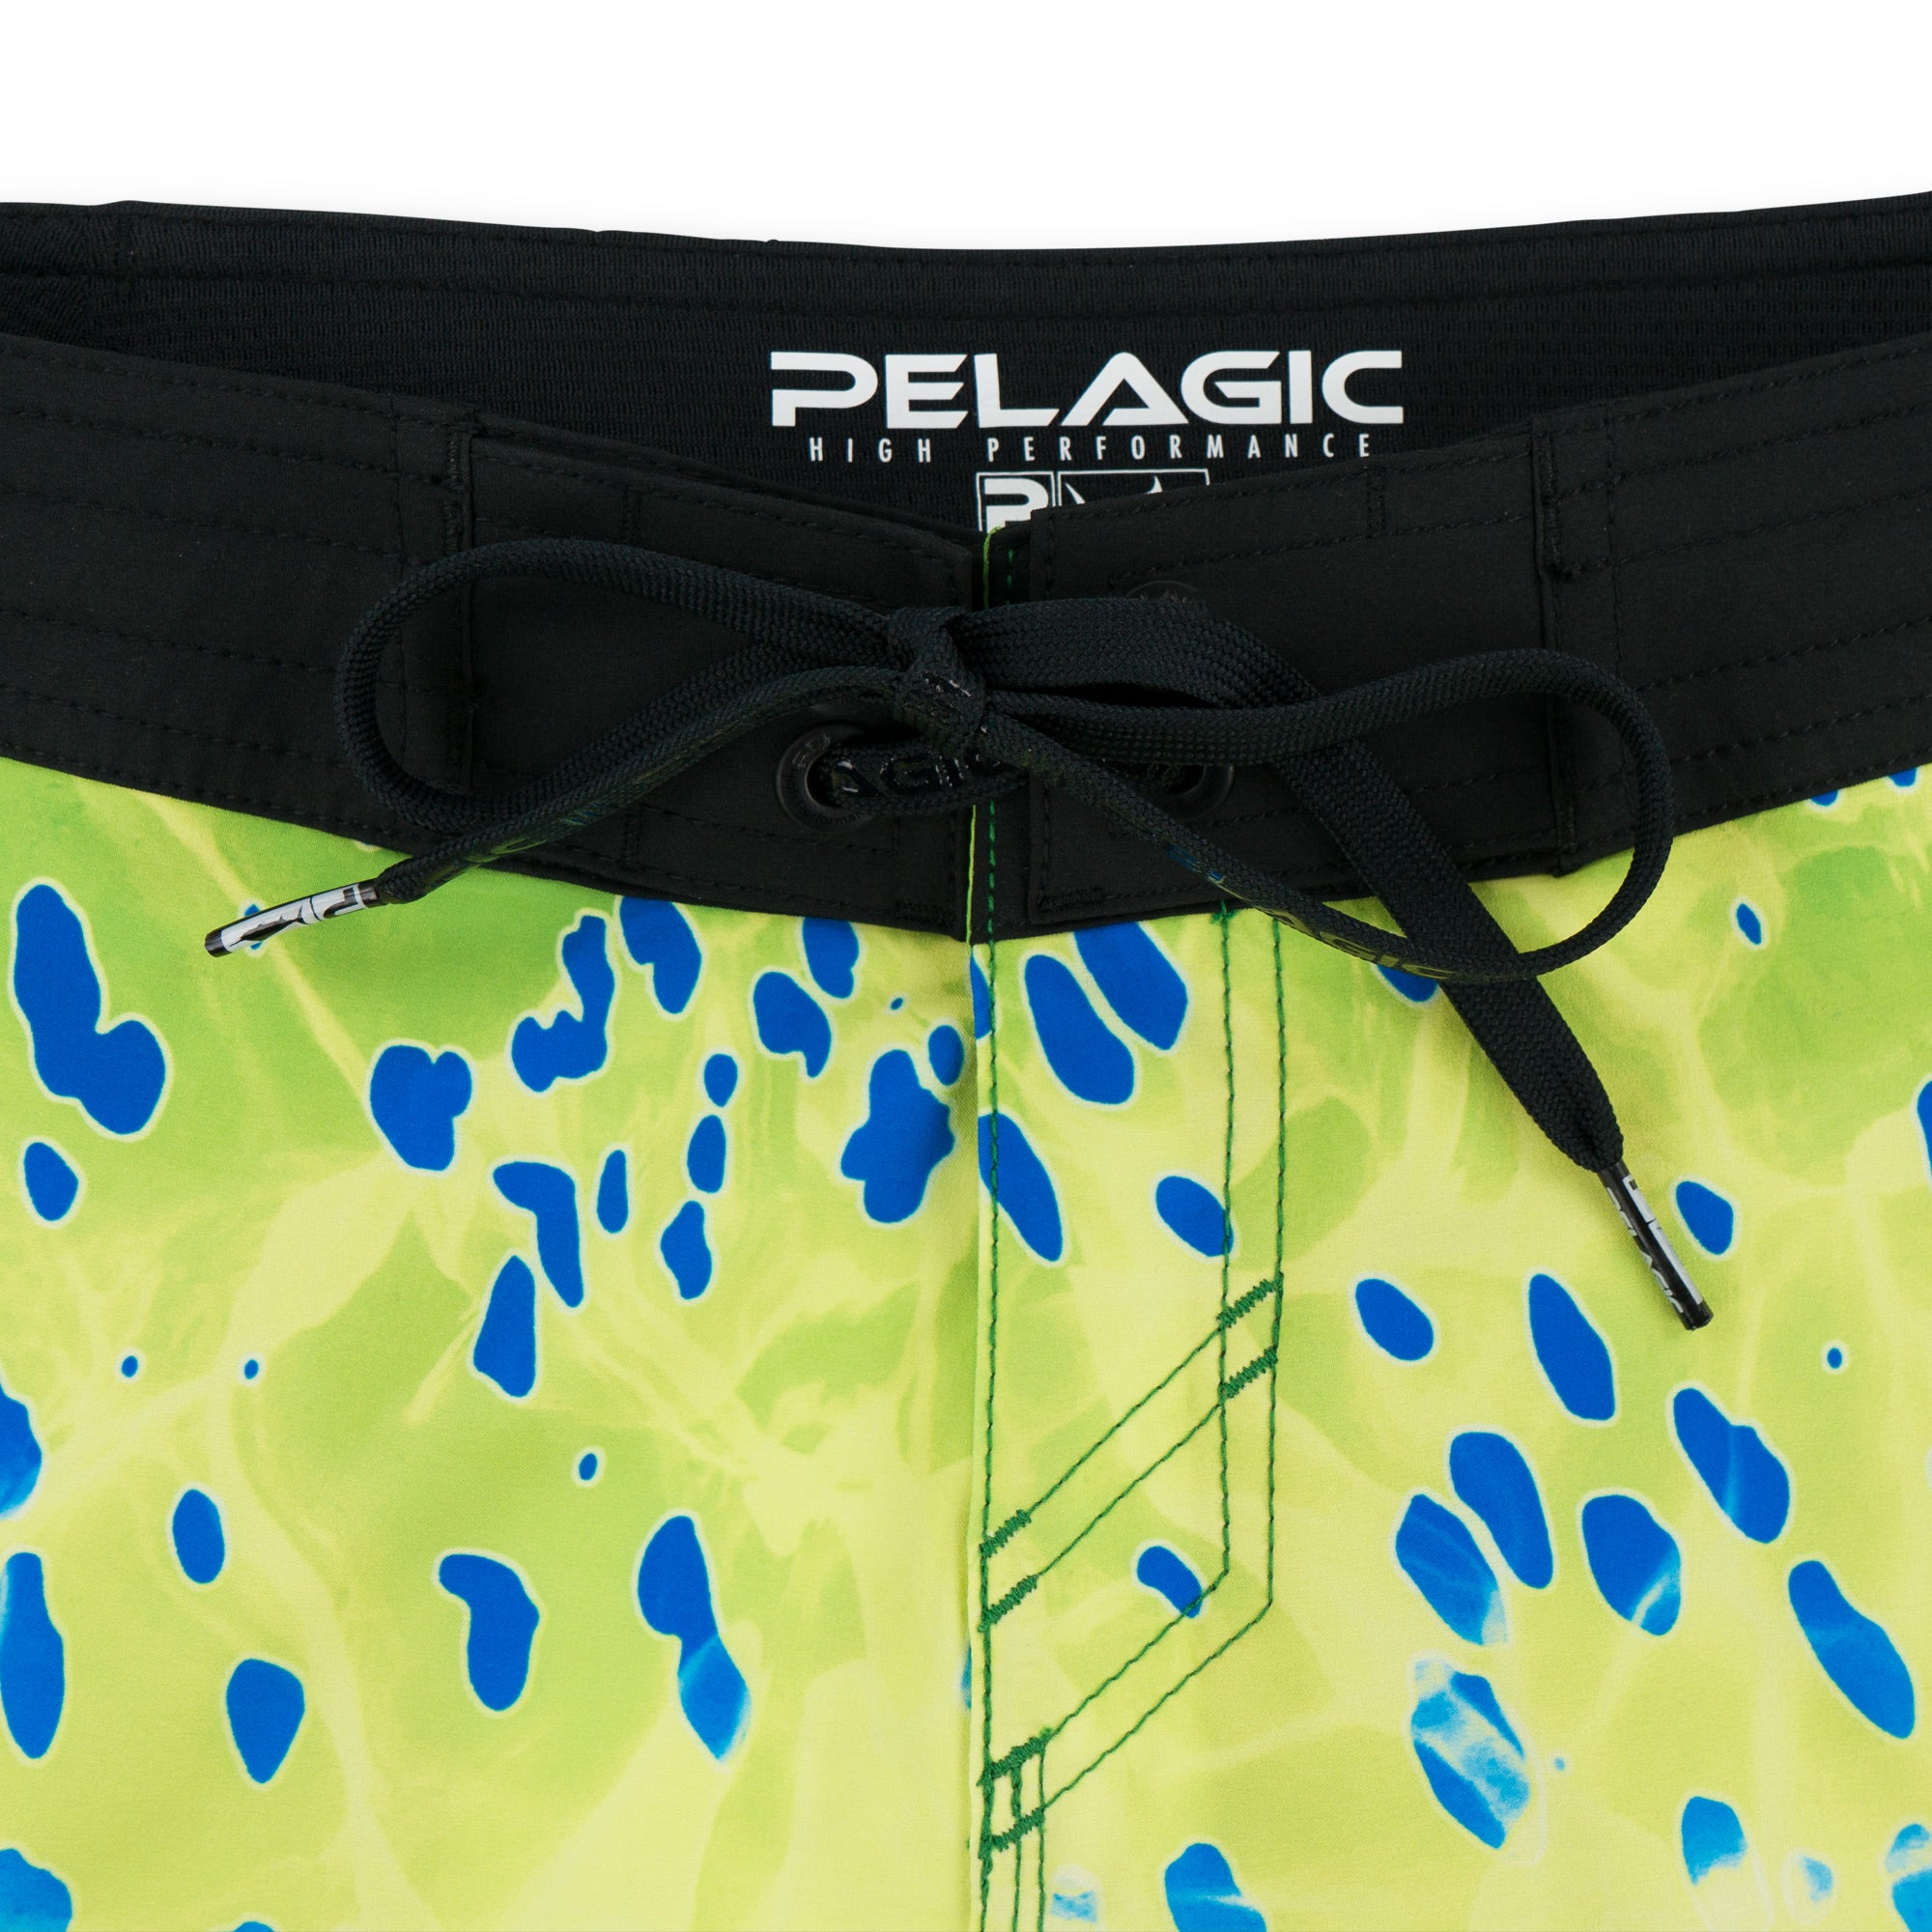 Pelagic Women's Green Dorado Shorts Fishing Swimming Board Shorts Size L  38x7.5